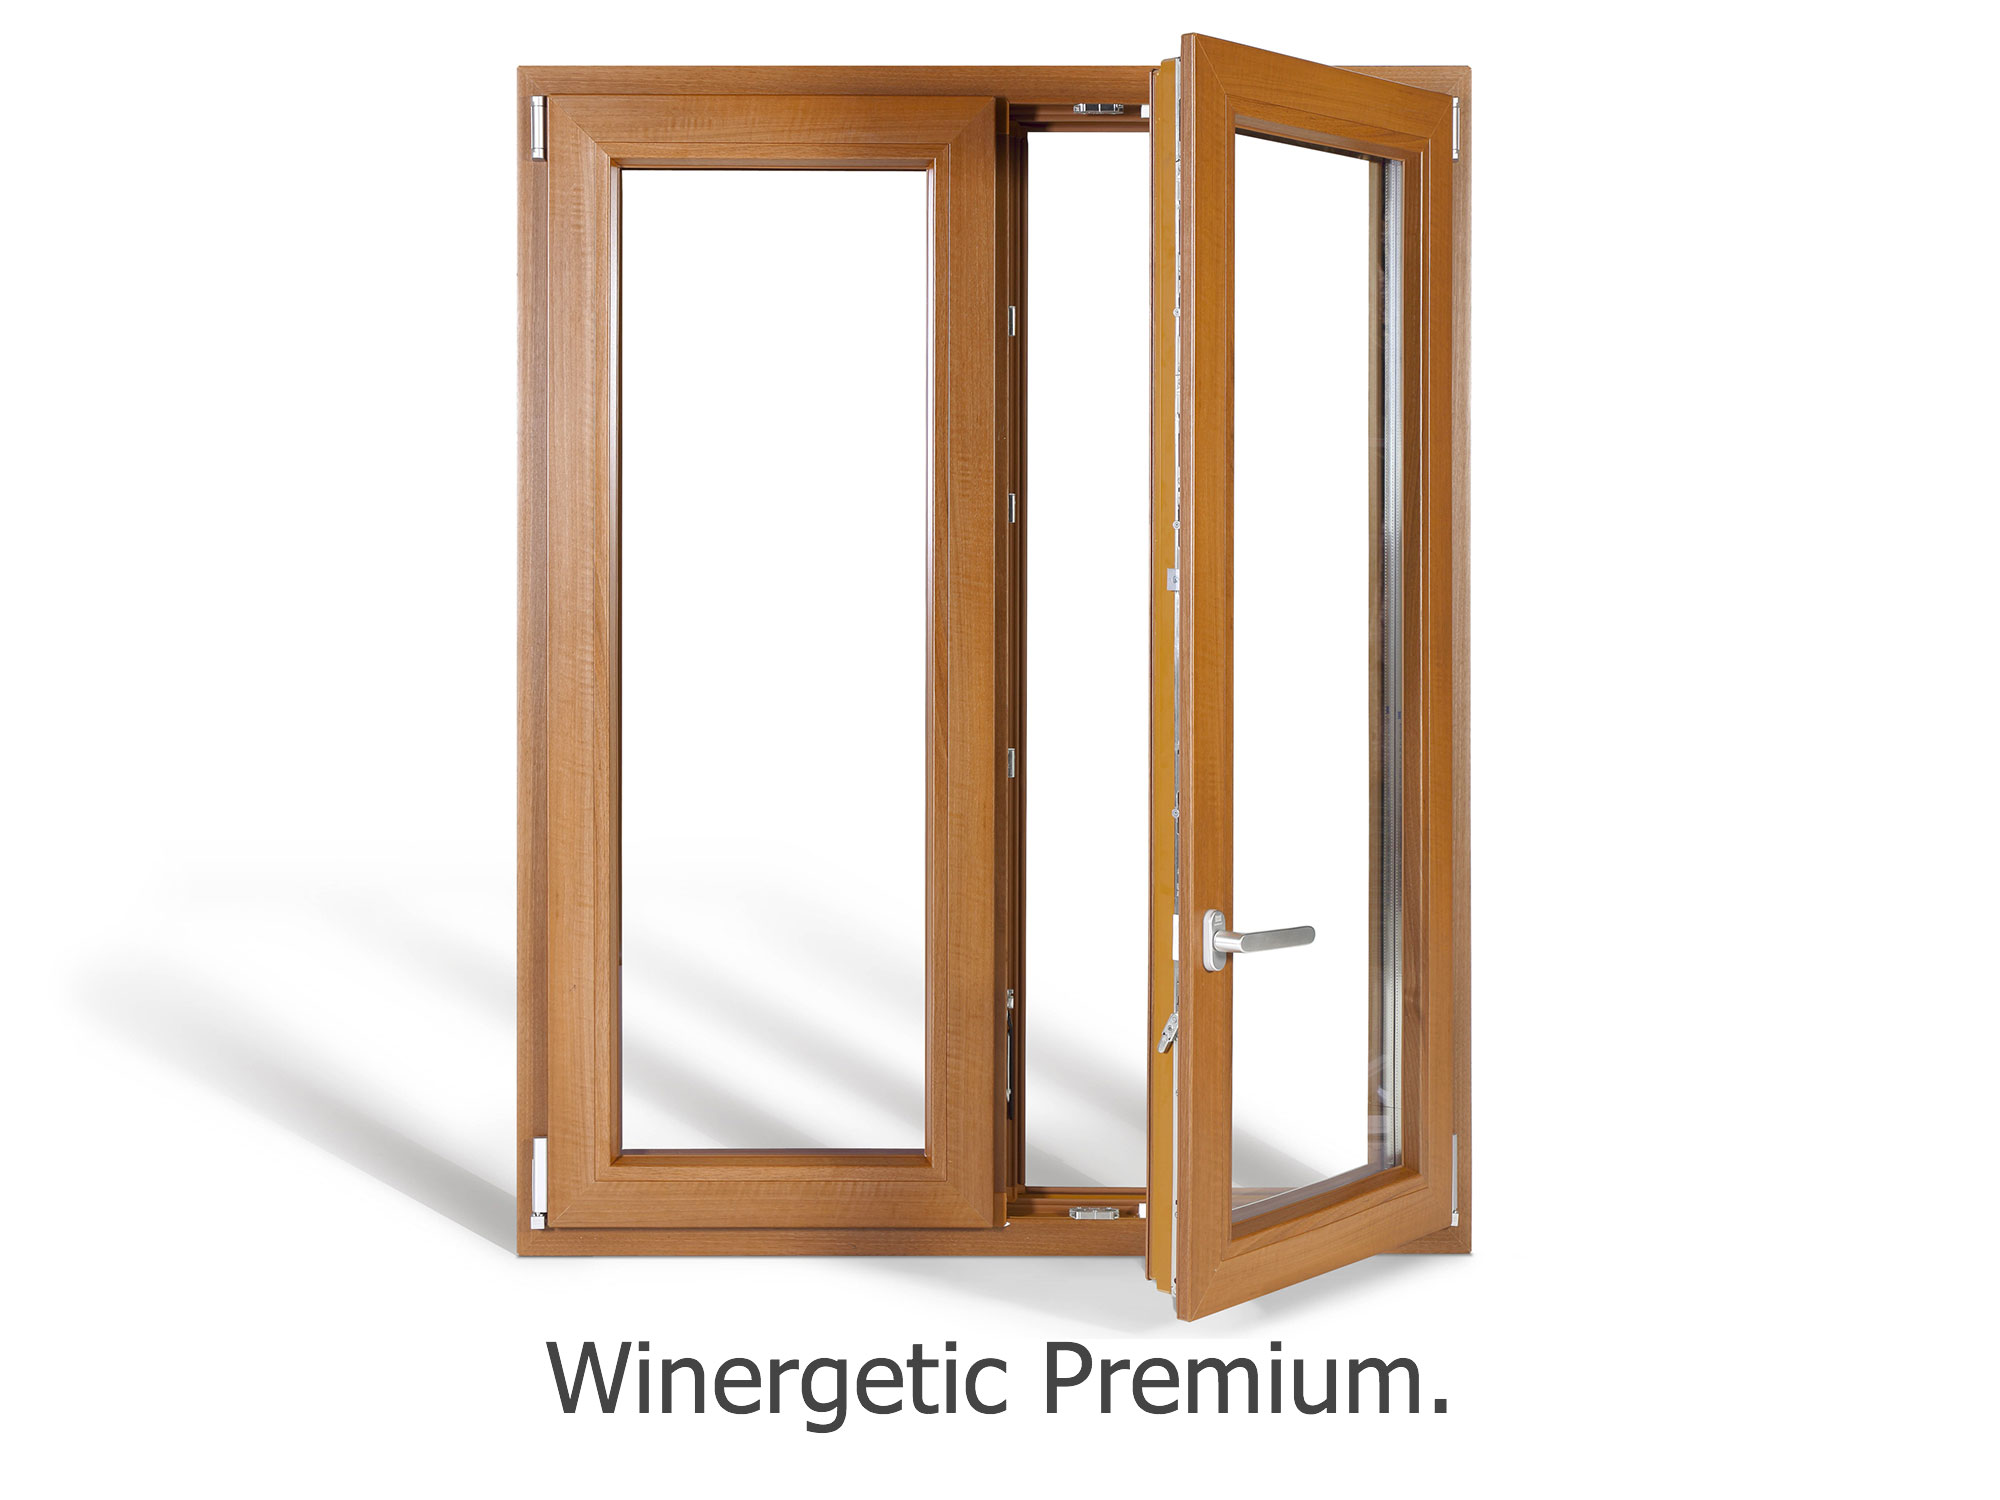 finestra-winergetic-premium3e6dcd2c-3e0b-8c34-c36f-8a1cc627e449B8C5974E-EE98-2365-E078-5AAD8609B4B1